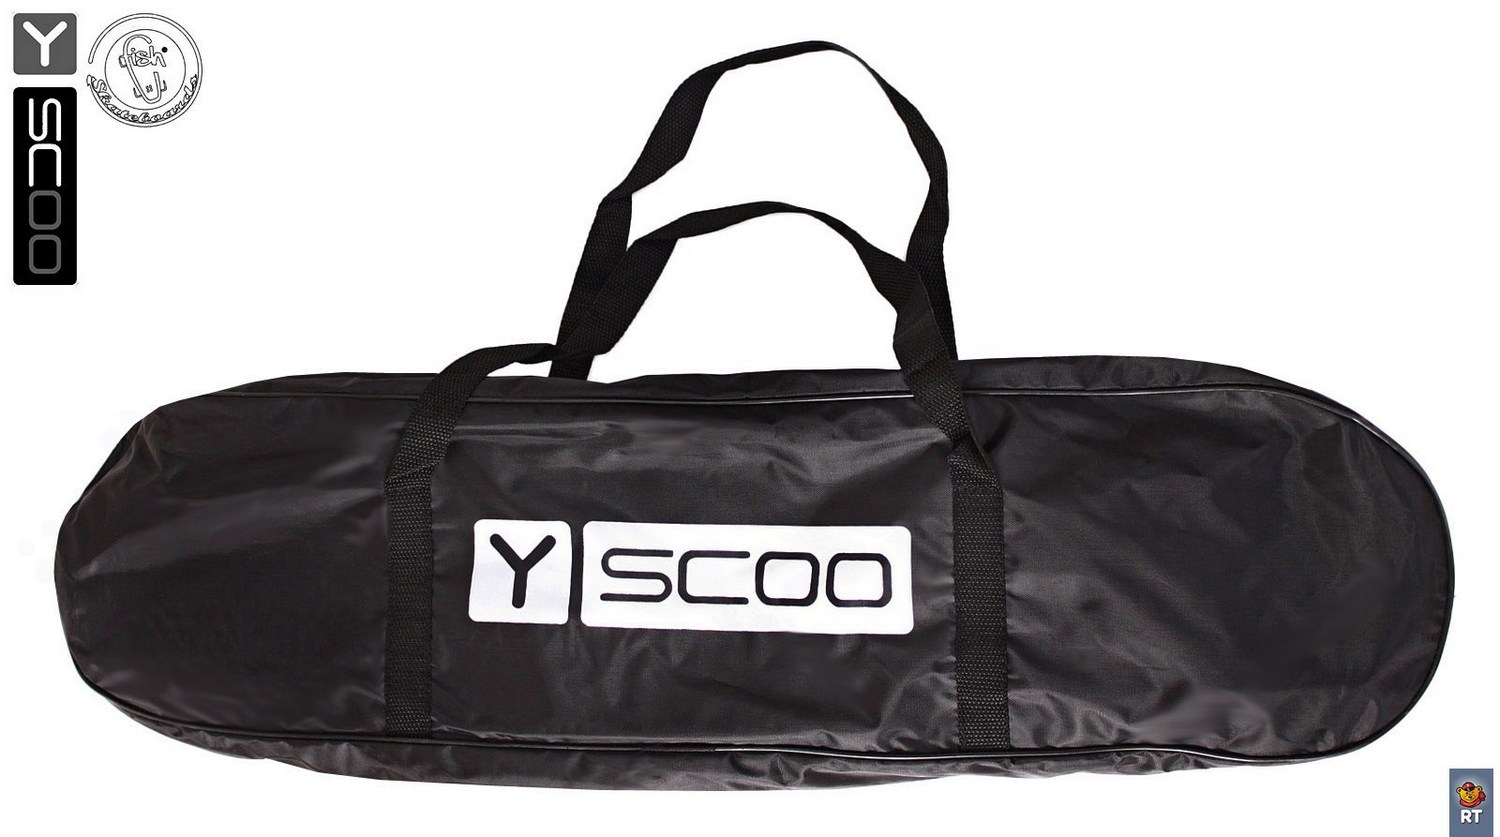 Скейтборд виниловый Y-Scoo Fishskateboard 22" 401-Y с сумкой, желто-фиолетовый  